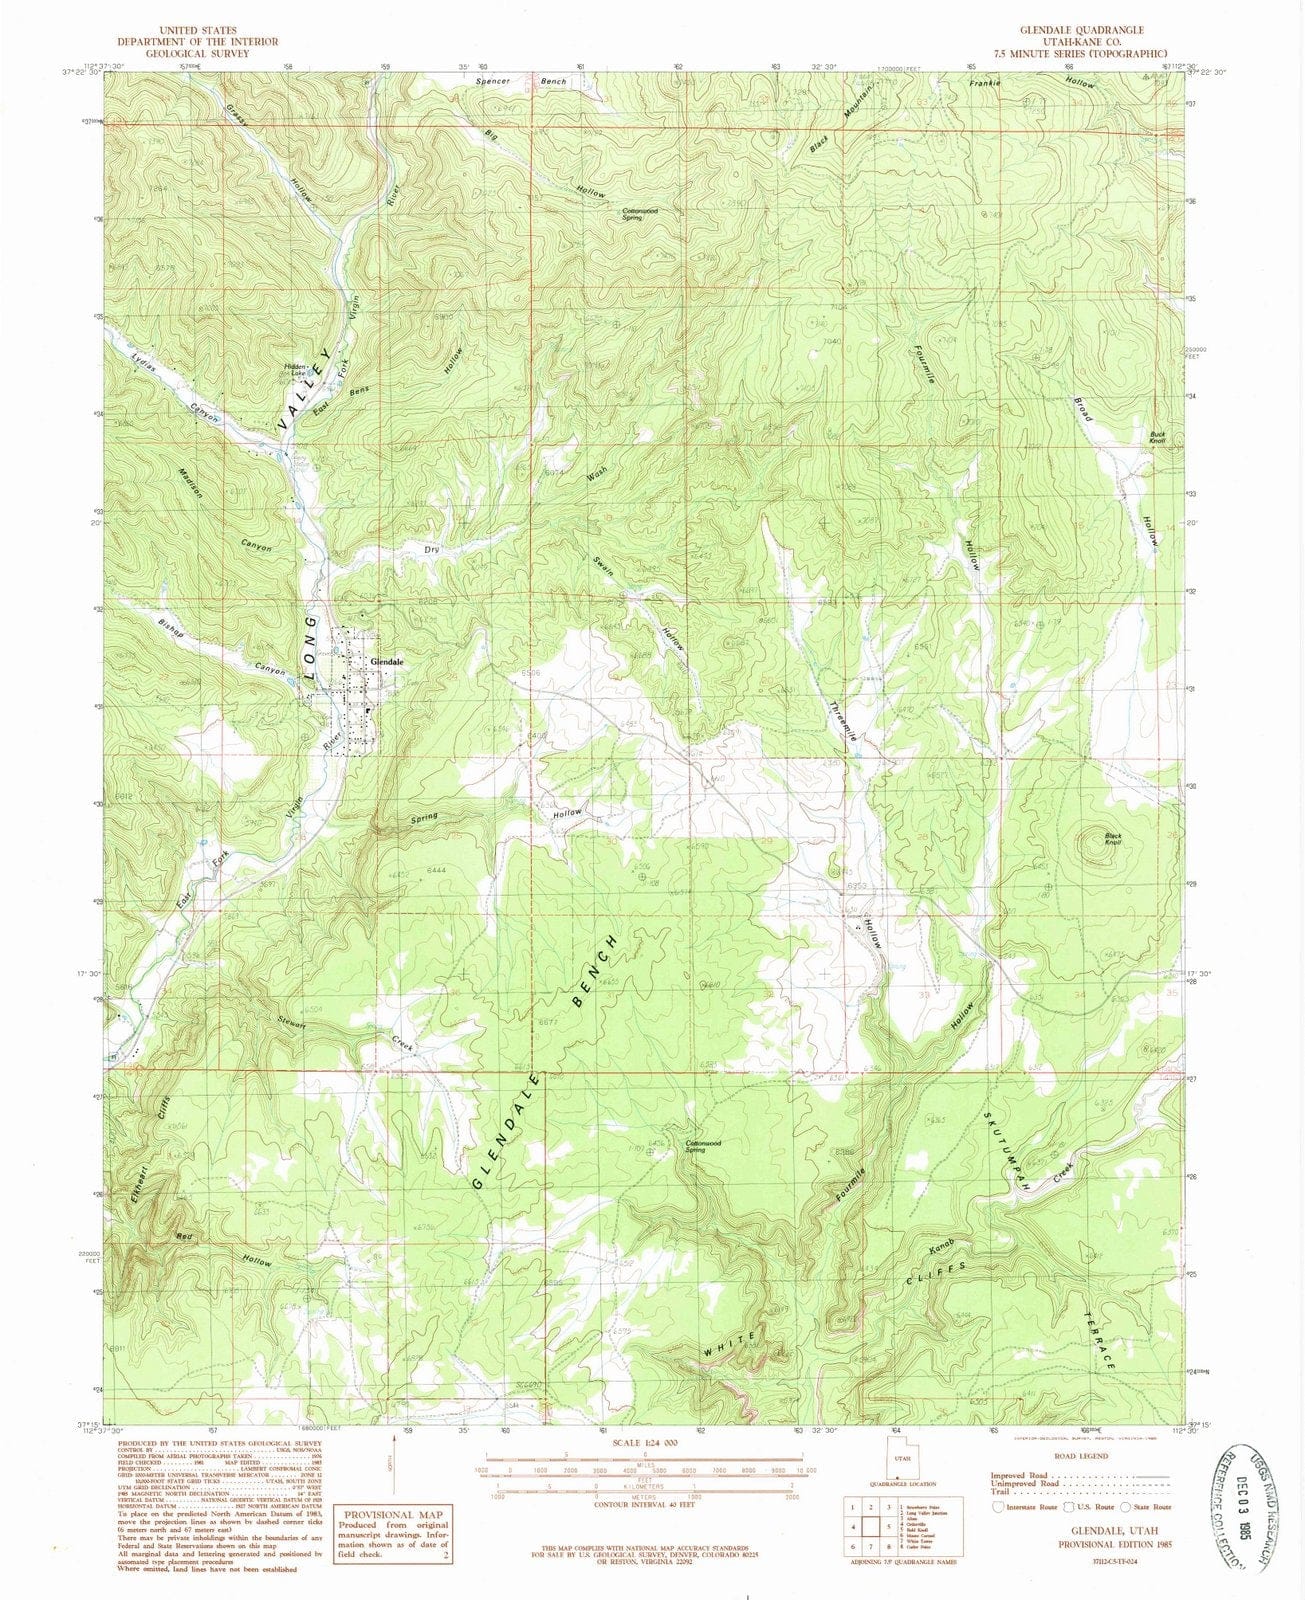 1985 Glendale, UT - Utah - USGS Topographic Map